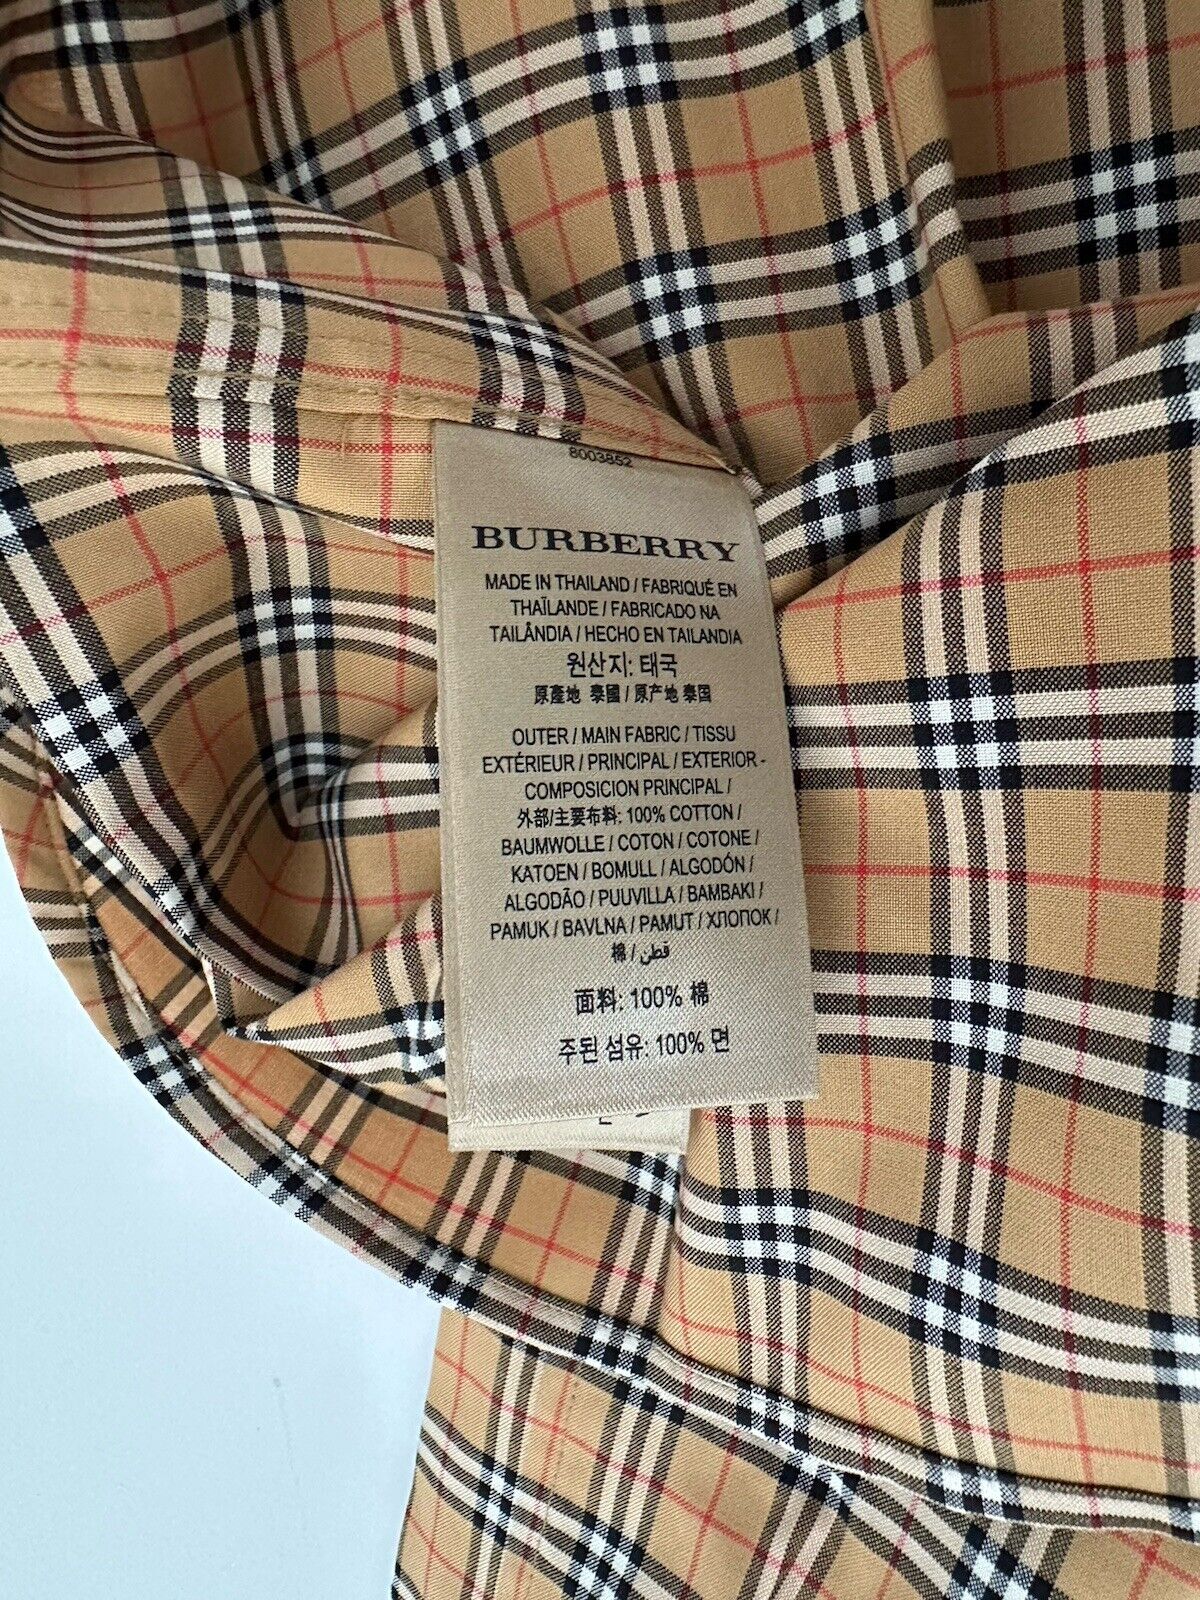 Burberry Edward Antique Yellow IP Check Mens Cotton Short Sleeve Shirt L 8003852